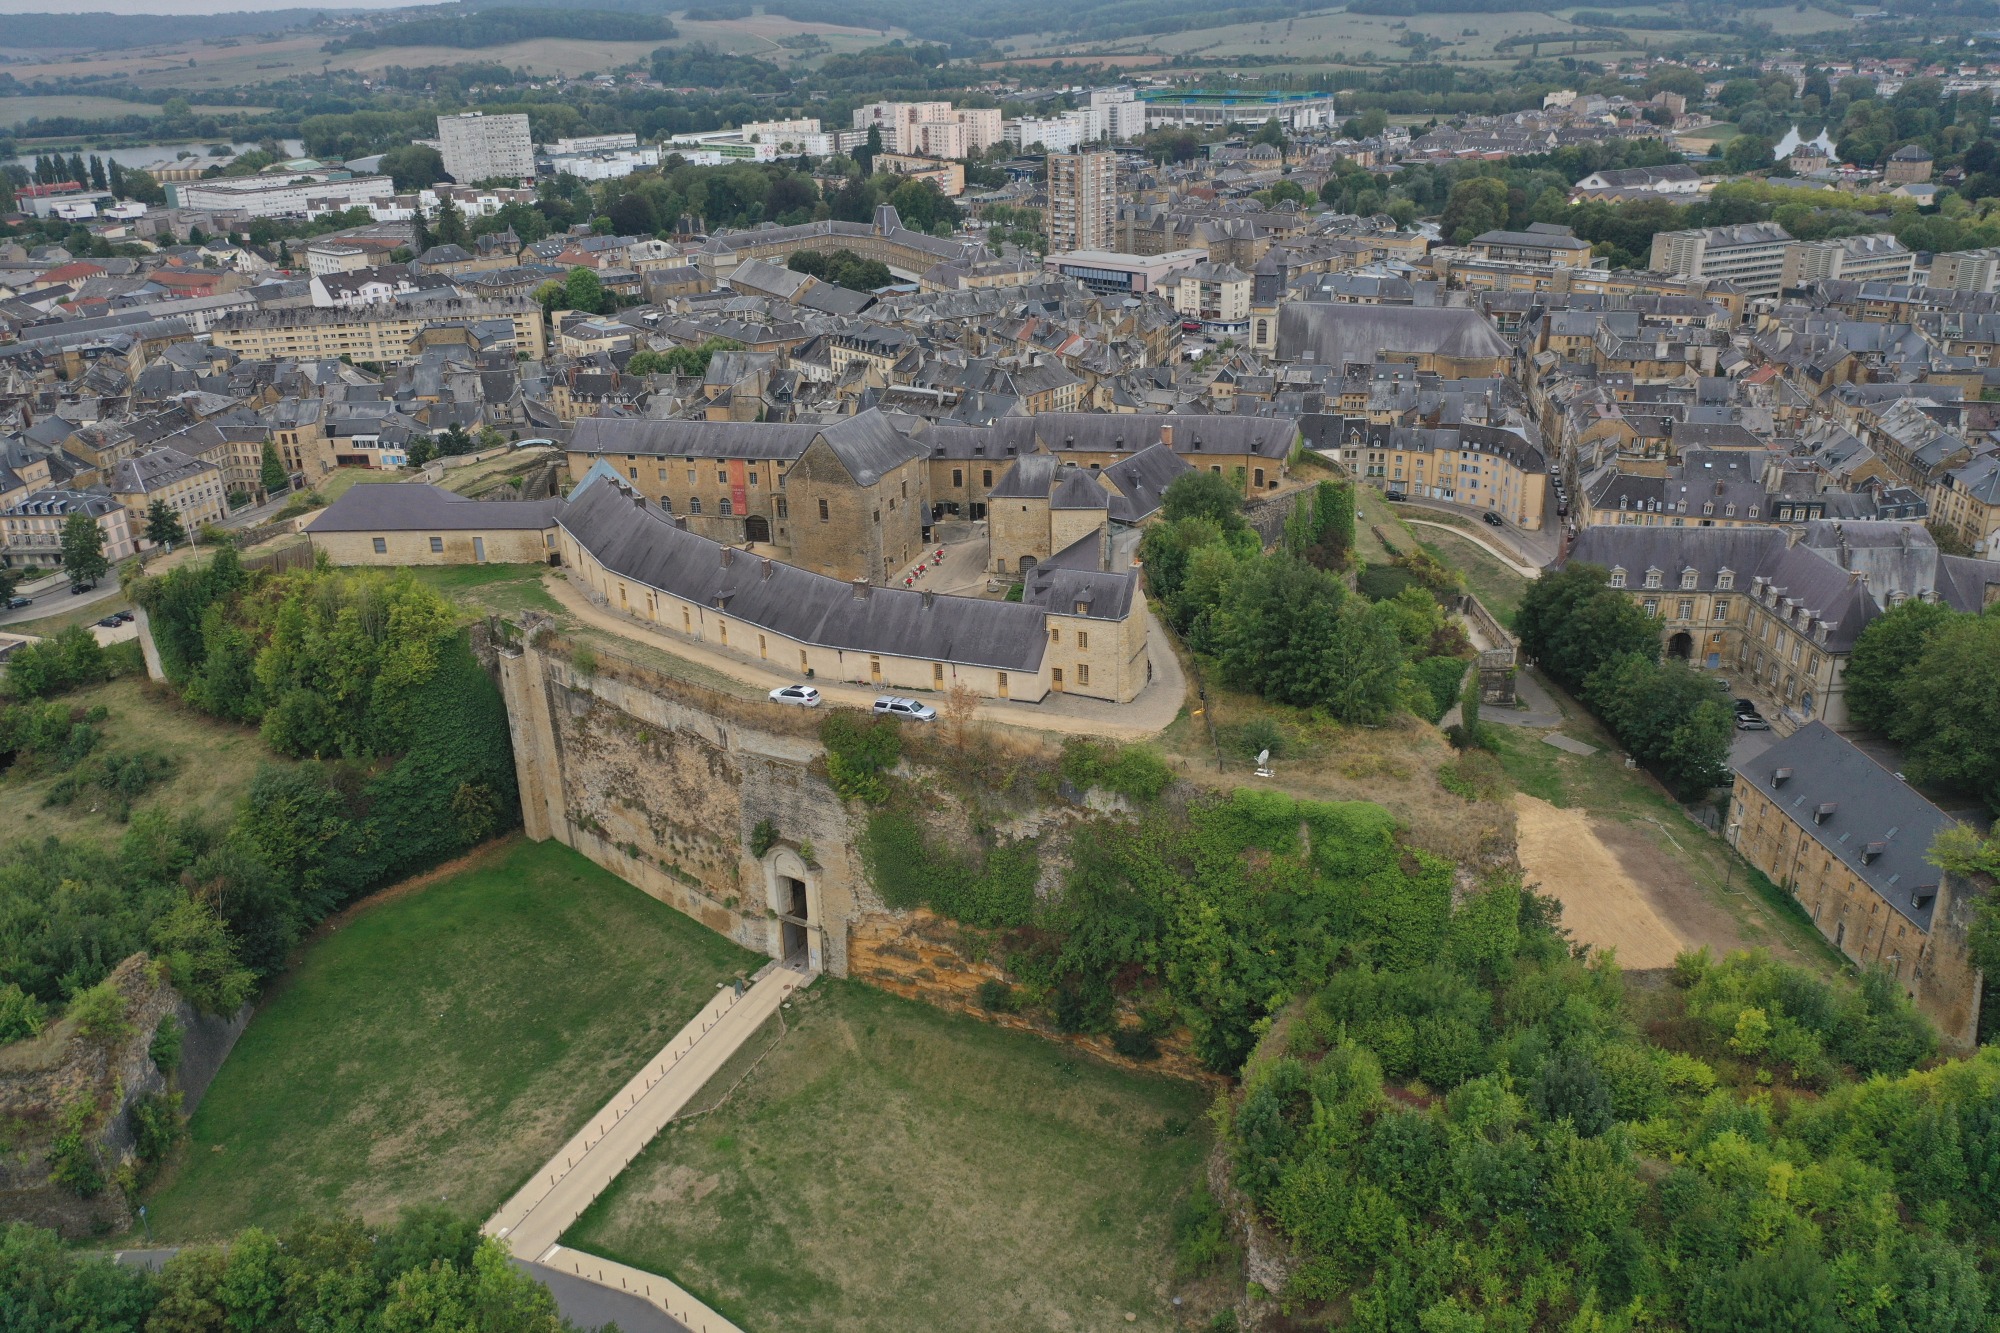 Château fort sedan